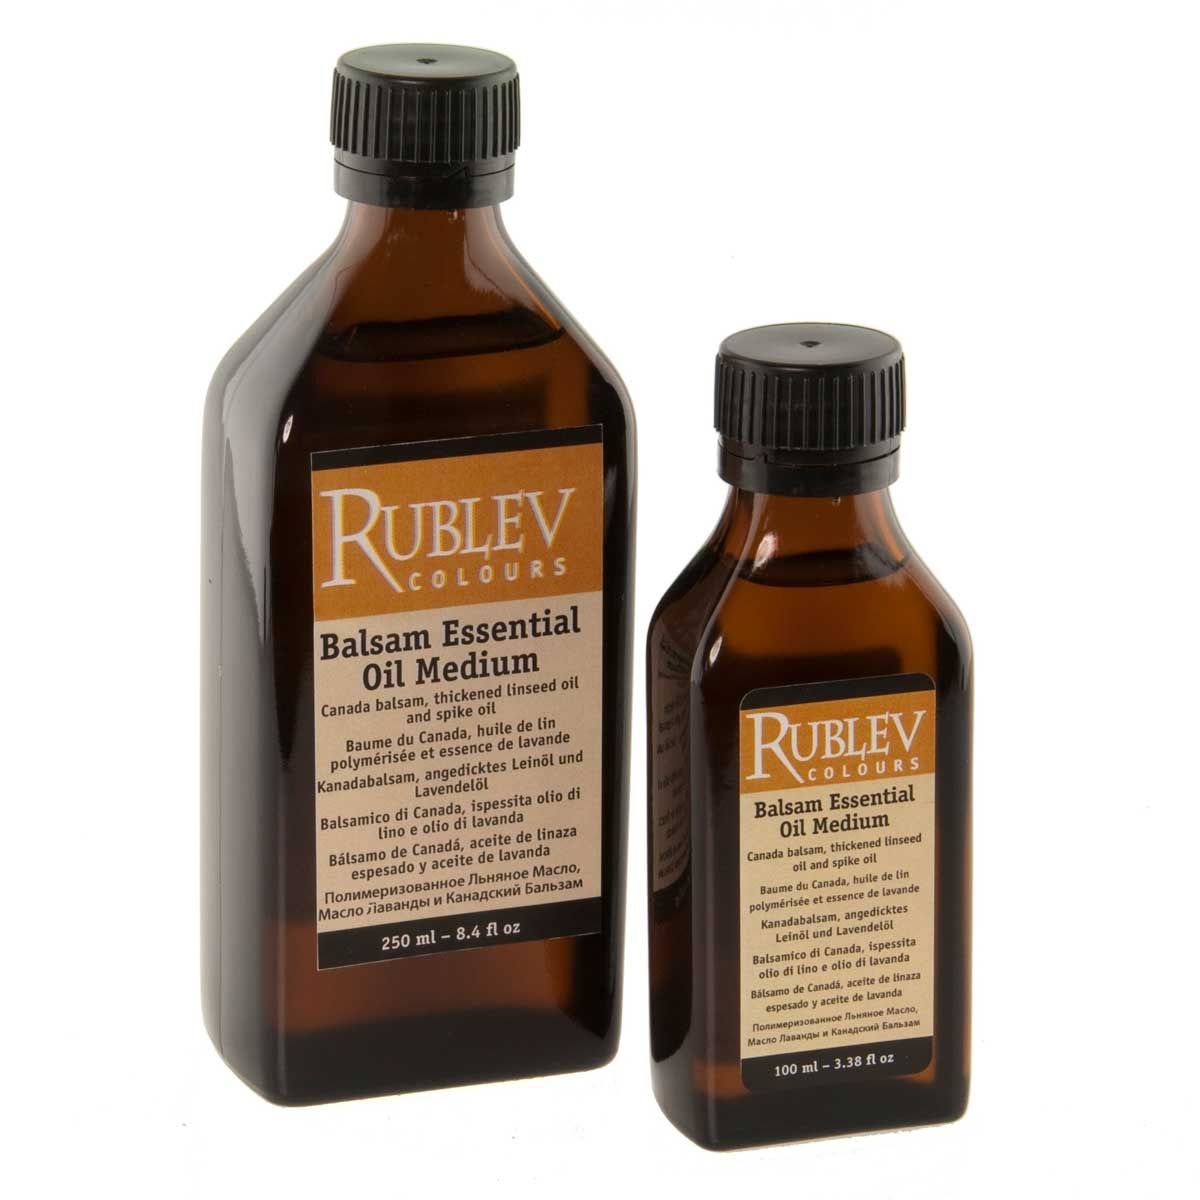 Rublev Colours Balsam Essential Oil Medium